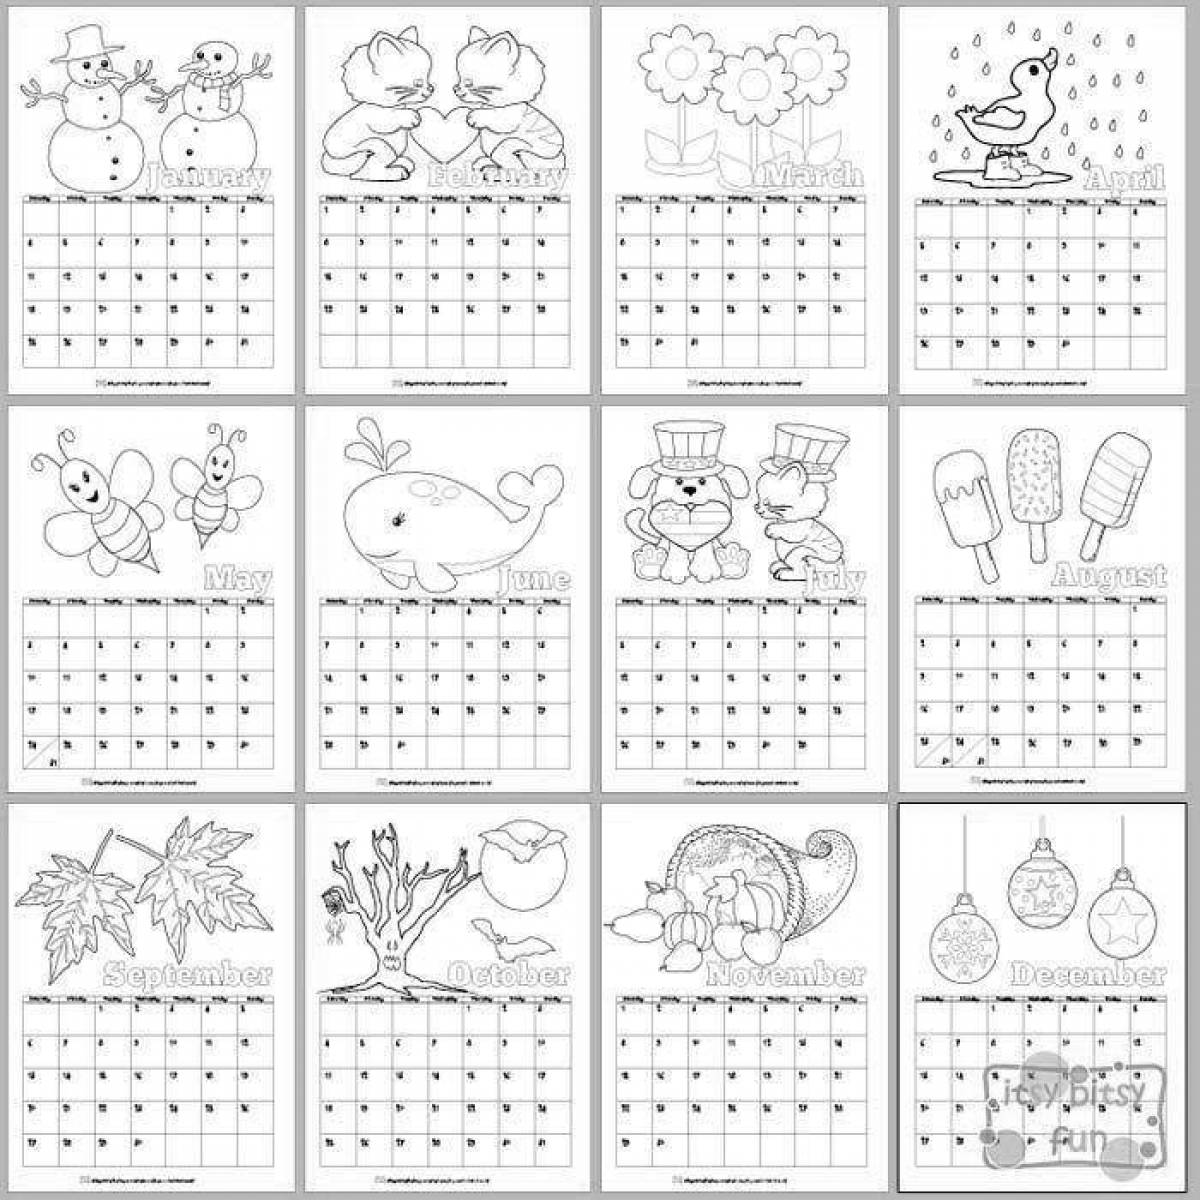 Playful calendar for 2023